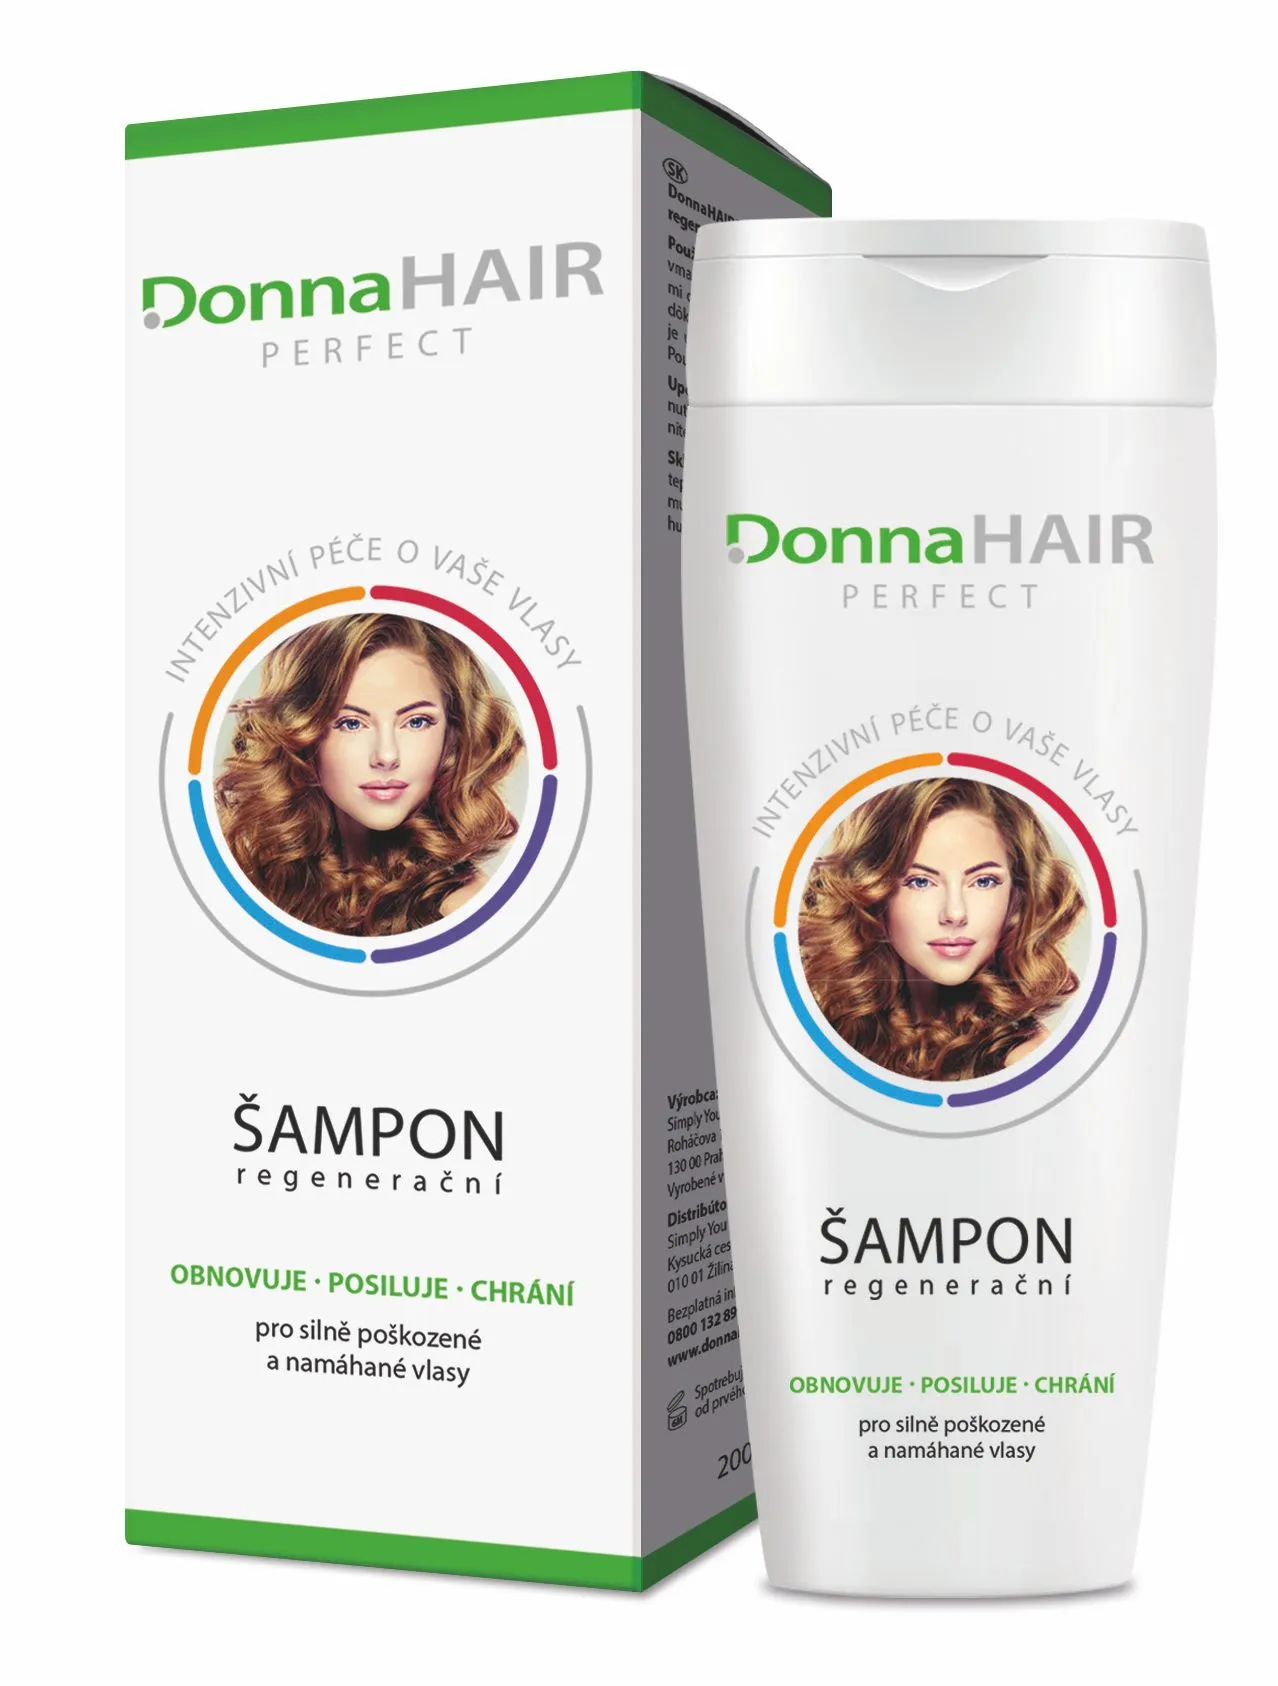 Donna Hair PERFECT regenerační šampon 200 ml